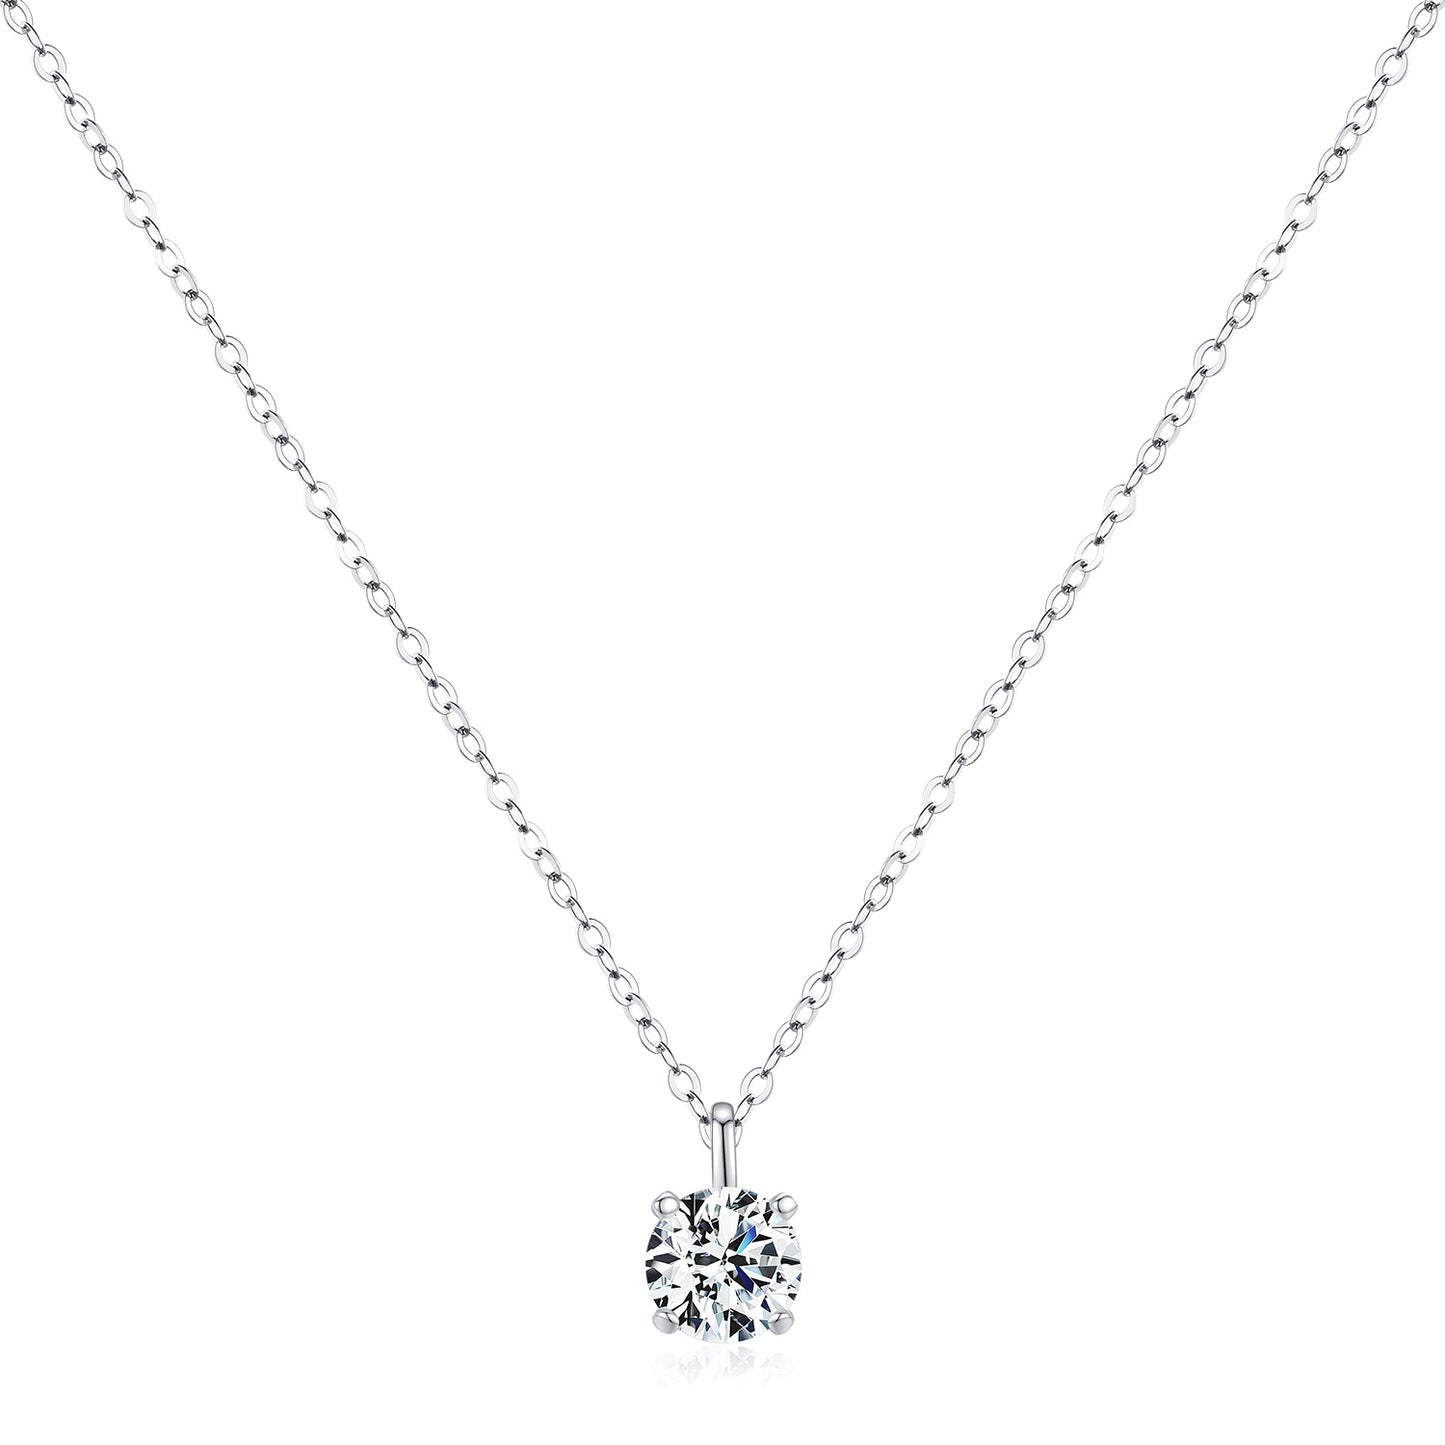 Moissanite Sparkling 1 Carat Sterling Silver Necklace for Women - Elegant and Versatile